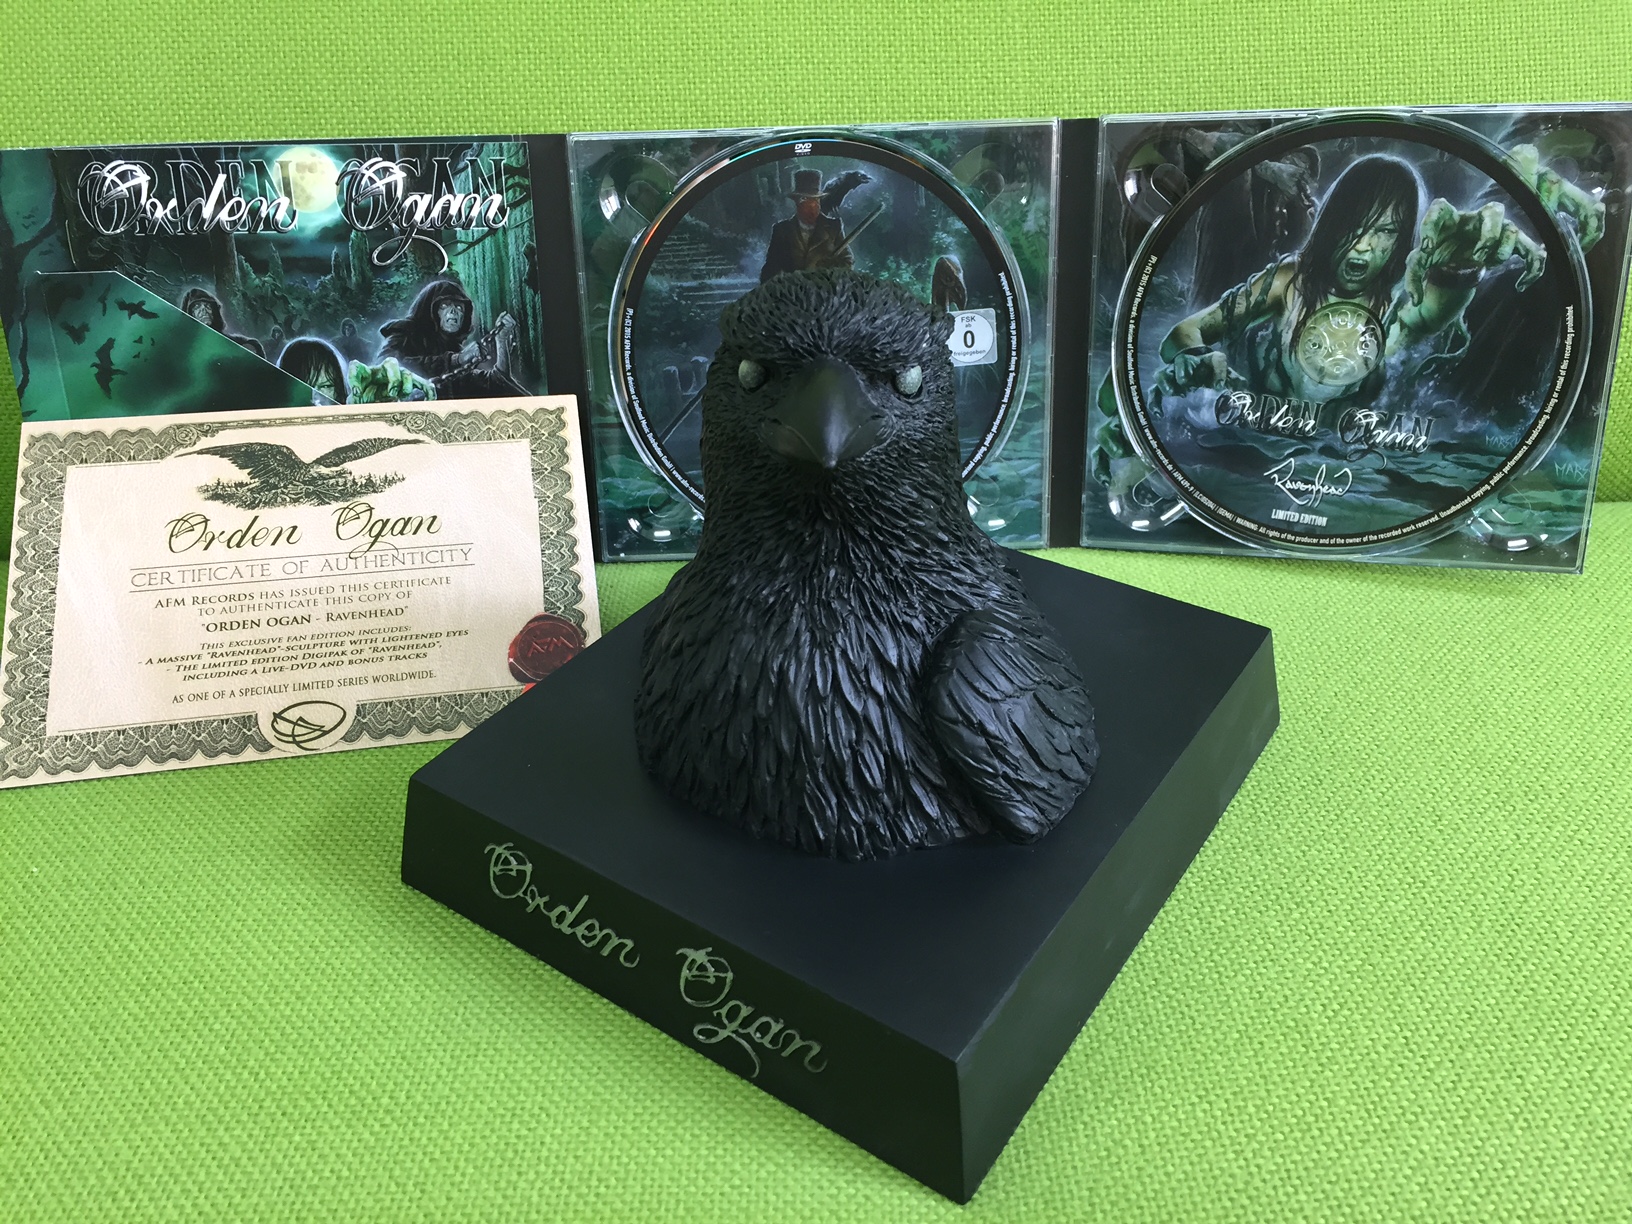 ORDEN OGAN "Ravenhead" Box Set 限定生産品入荷しました!!